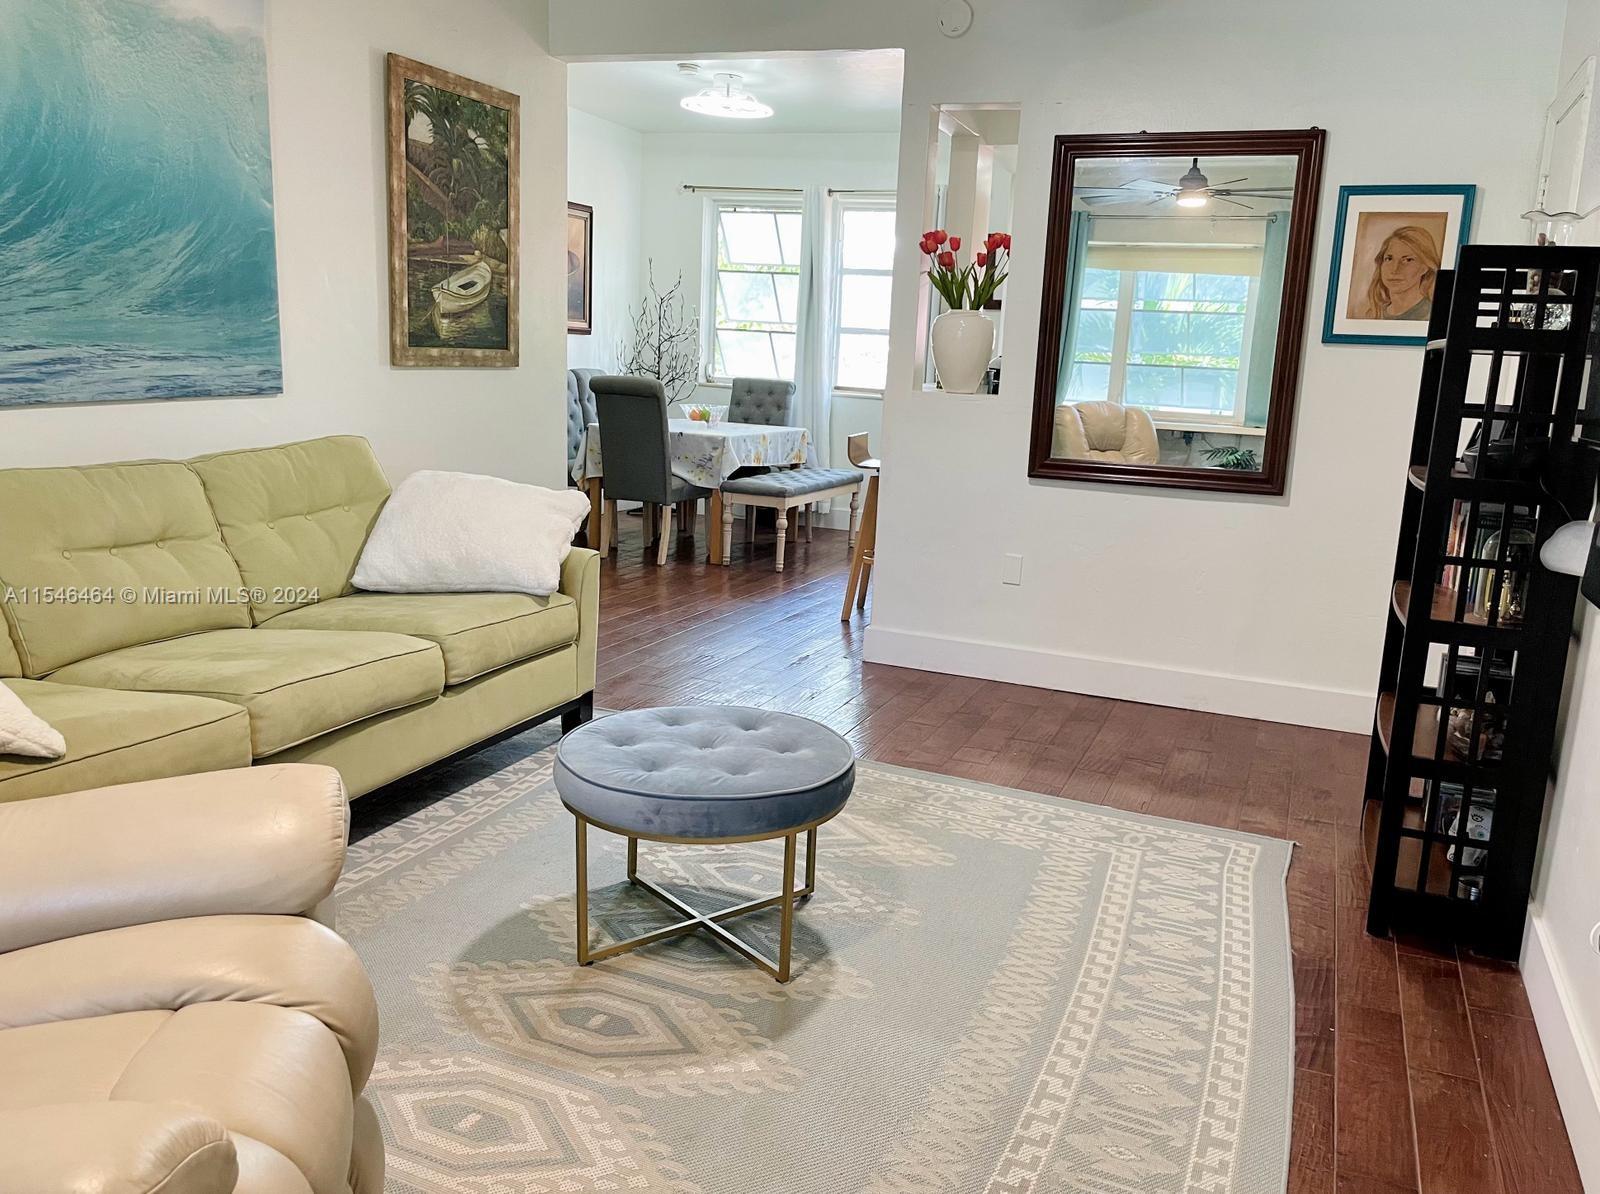 Property for Sale at 728 Lenox Ave 7A, Miami Beach, Miami-Dade County, Florida - Bedrooms: 1 
Bathrooms: 1  - $274,000